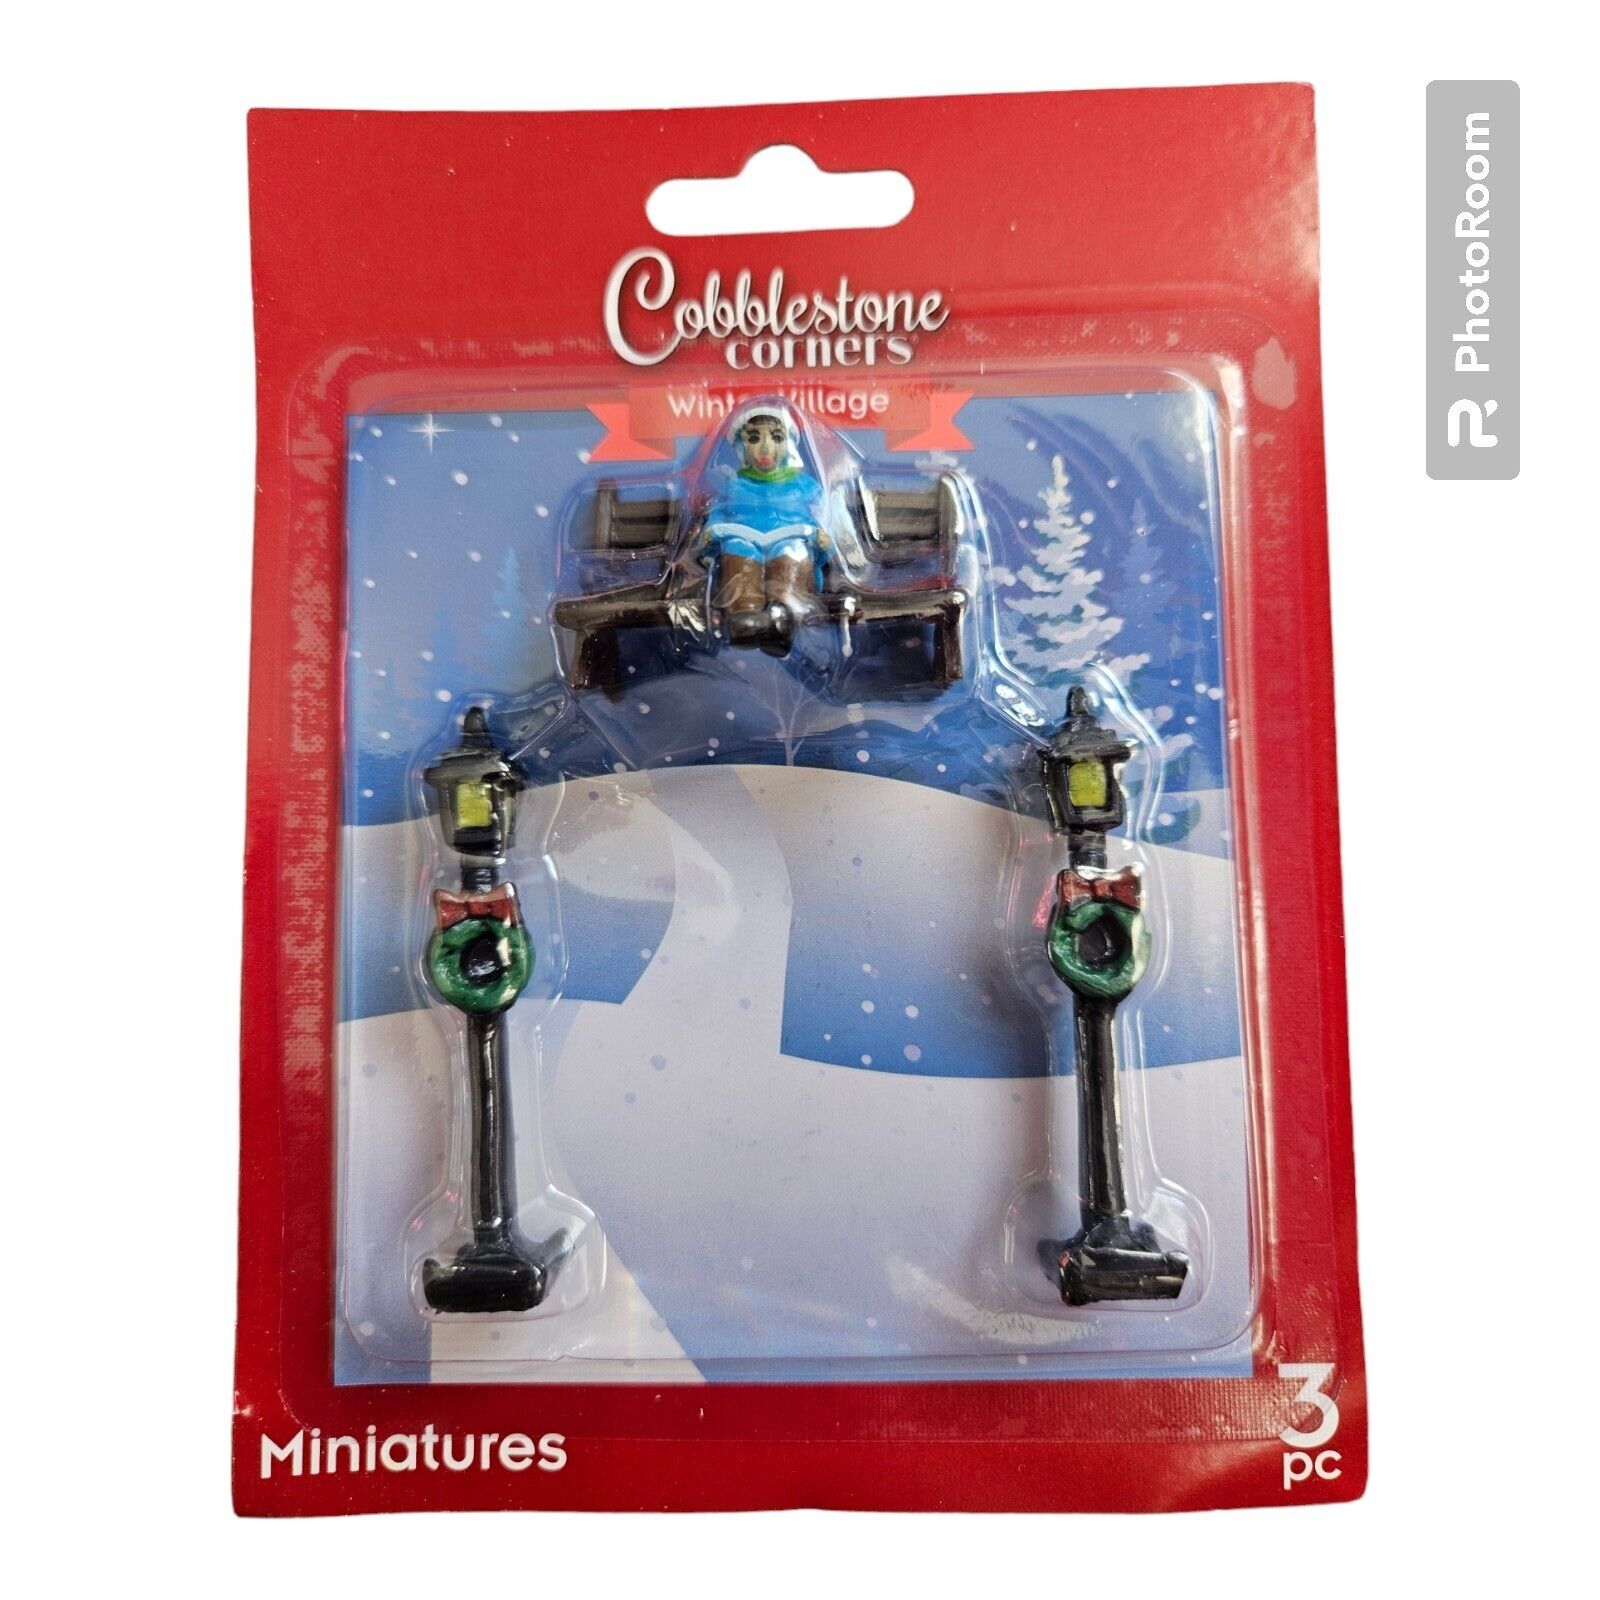 Cobblestone Corners Winter Village Miniatures Person Bench Street Lamps 3 Piece